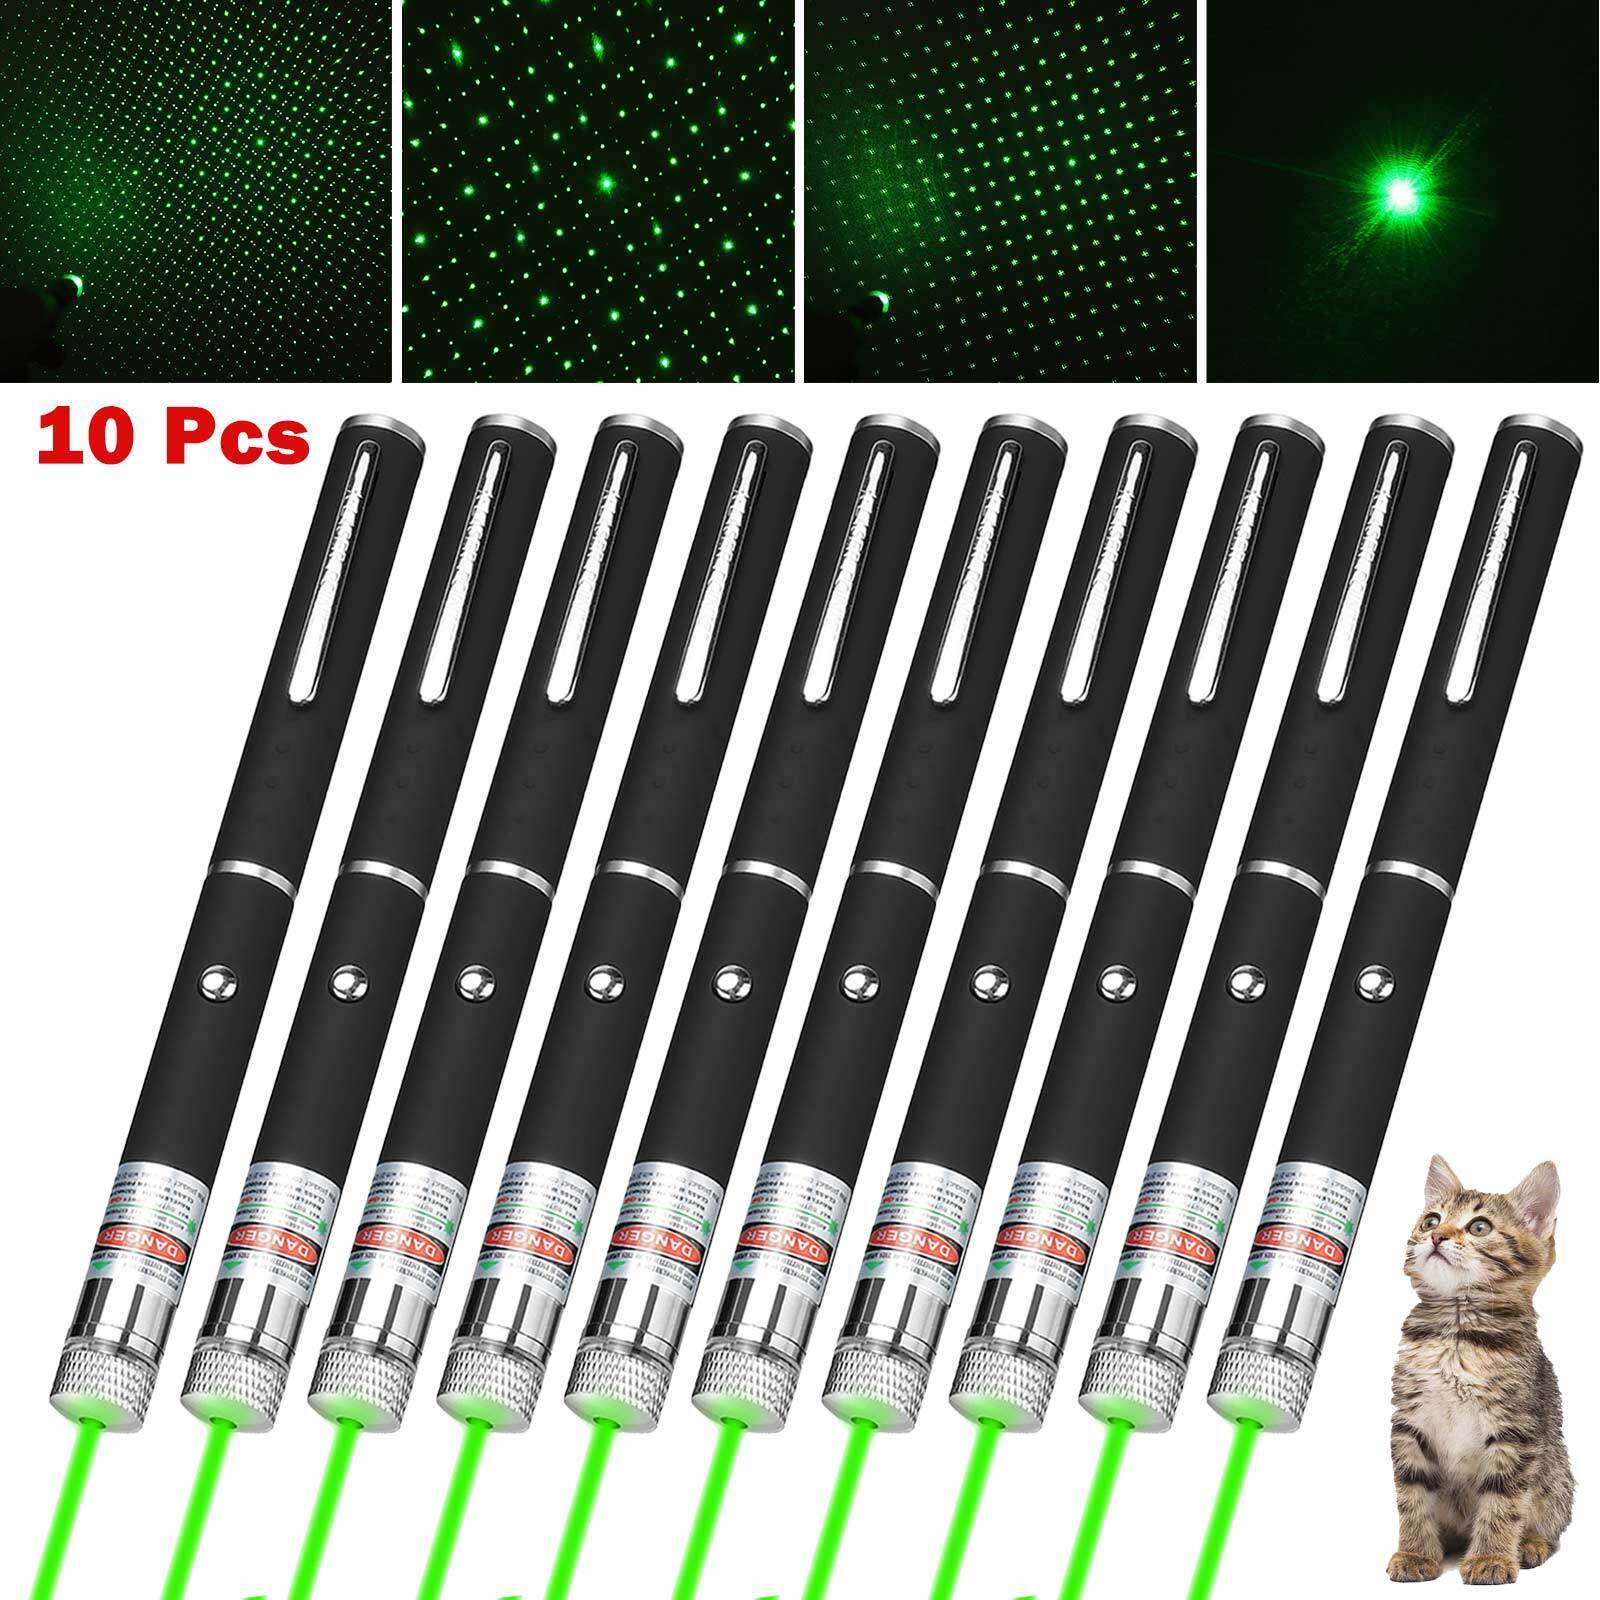 10 Pcs 990Mile Green Laser Pointer Pen 532nm Visible Beam Lazer Light SkyWolfEye Green Laser Pointer Pen